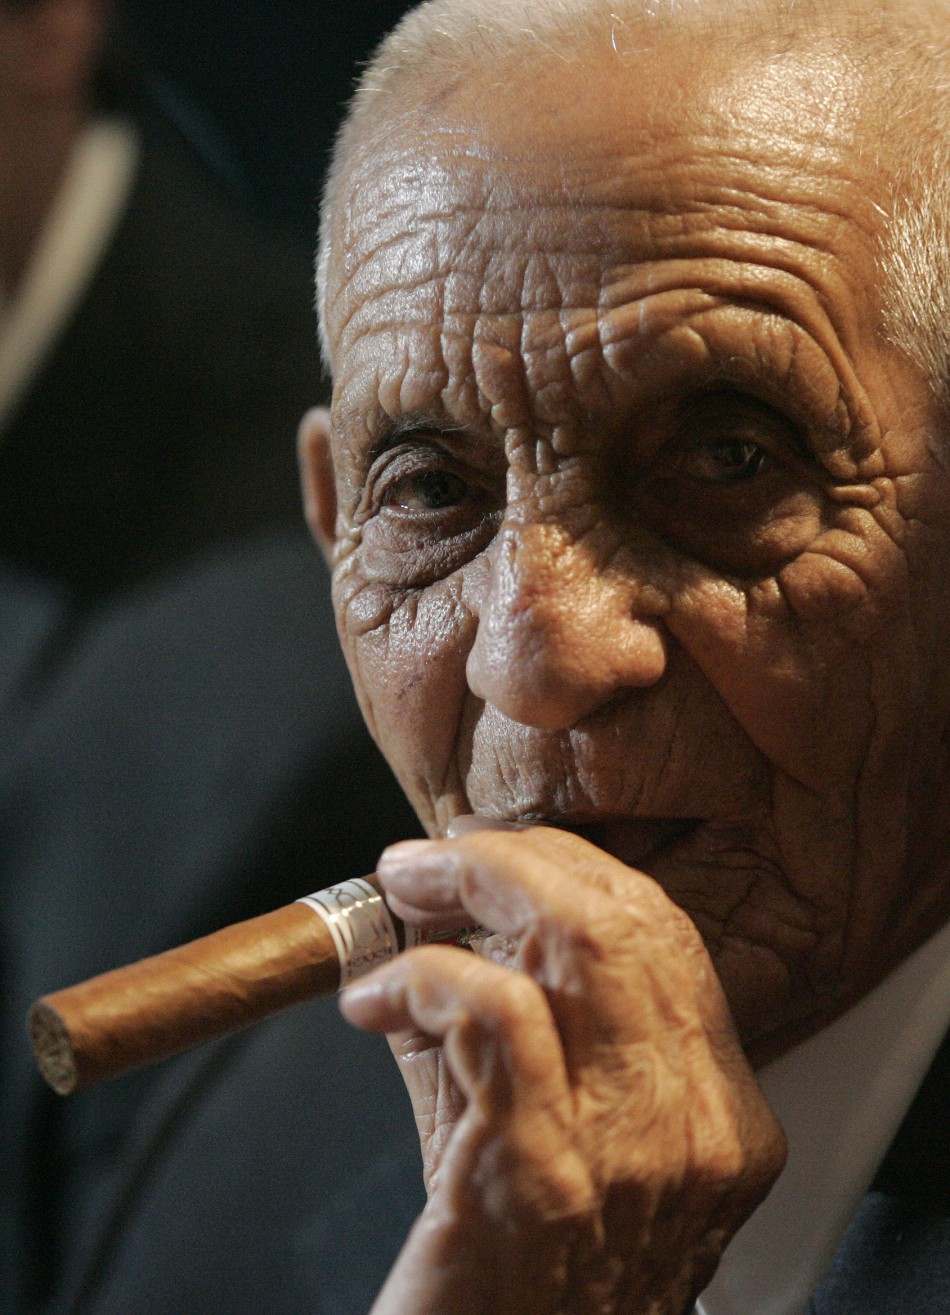 Alejandro Robaina, Cubas most famous tobacco planter